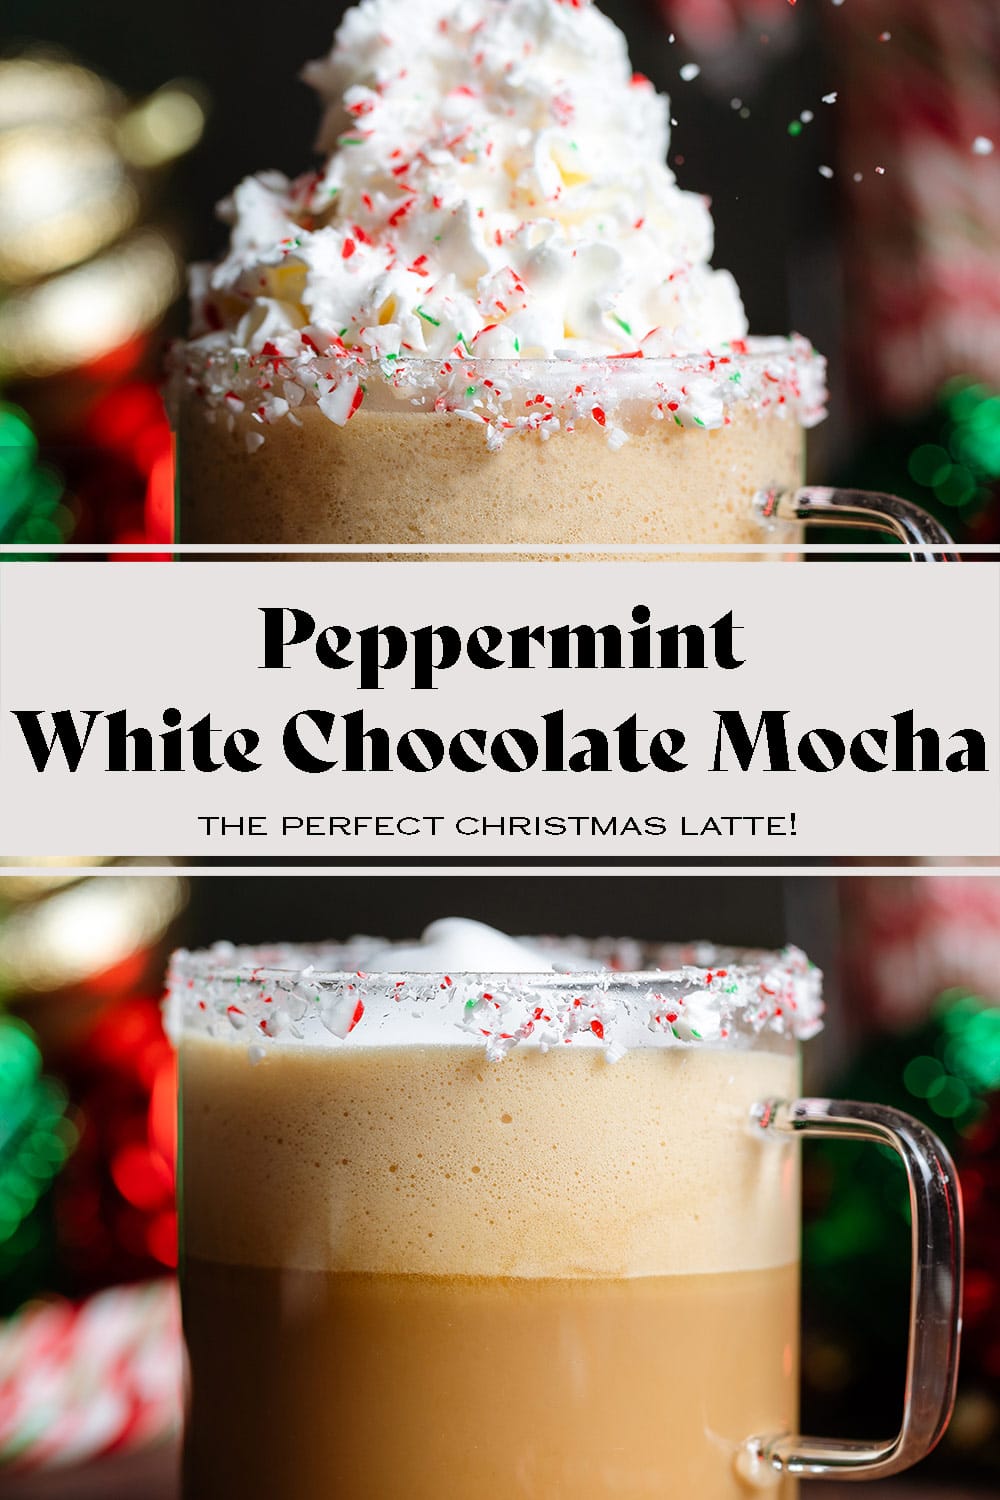 Peppermint White Chocolate Mocha